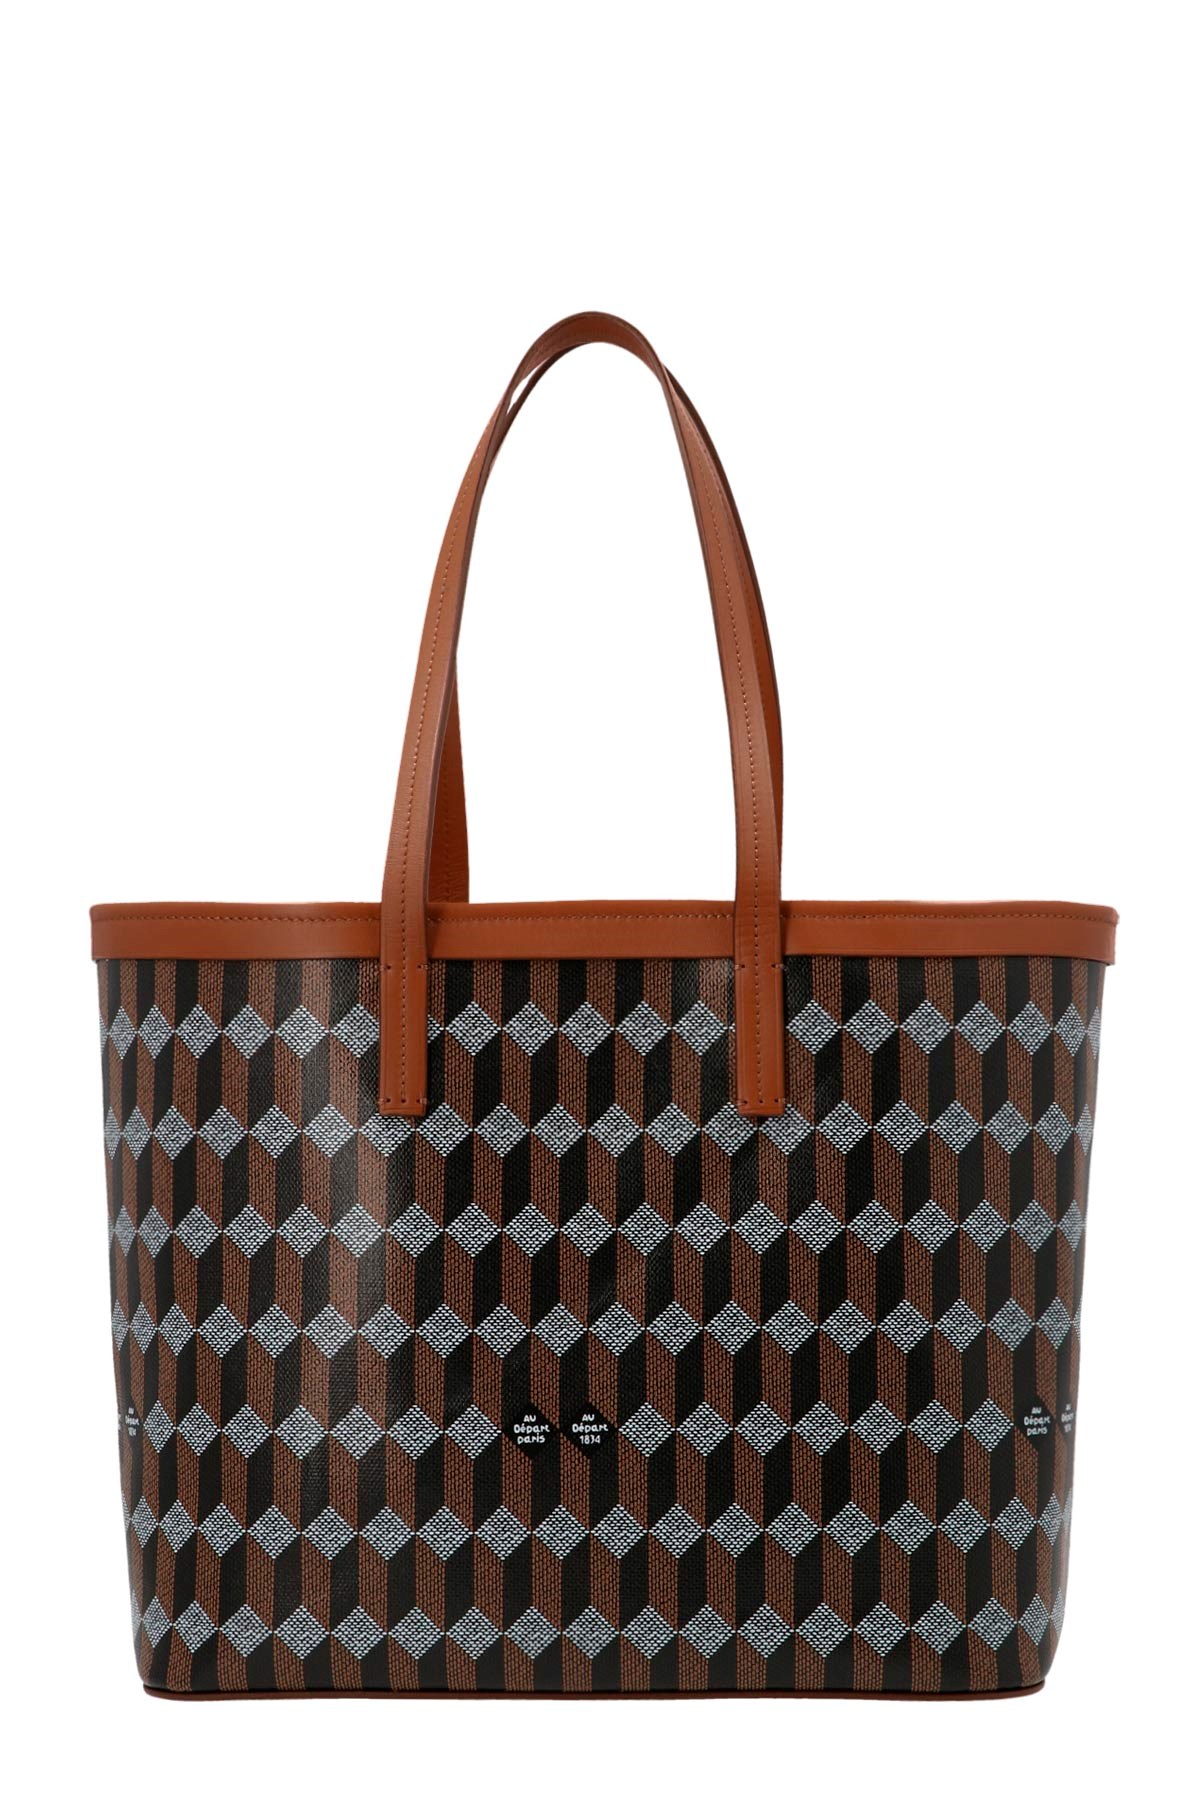 AU DEPART 'Roquette Horizontal' Shopping Bag